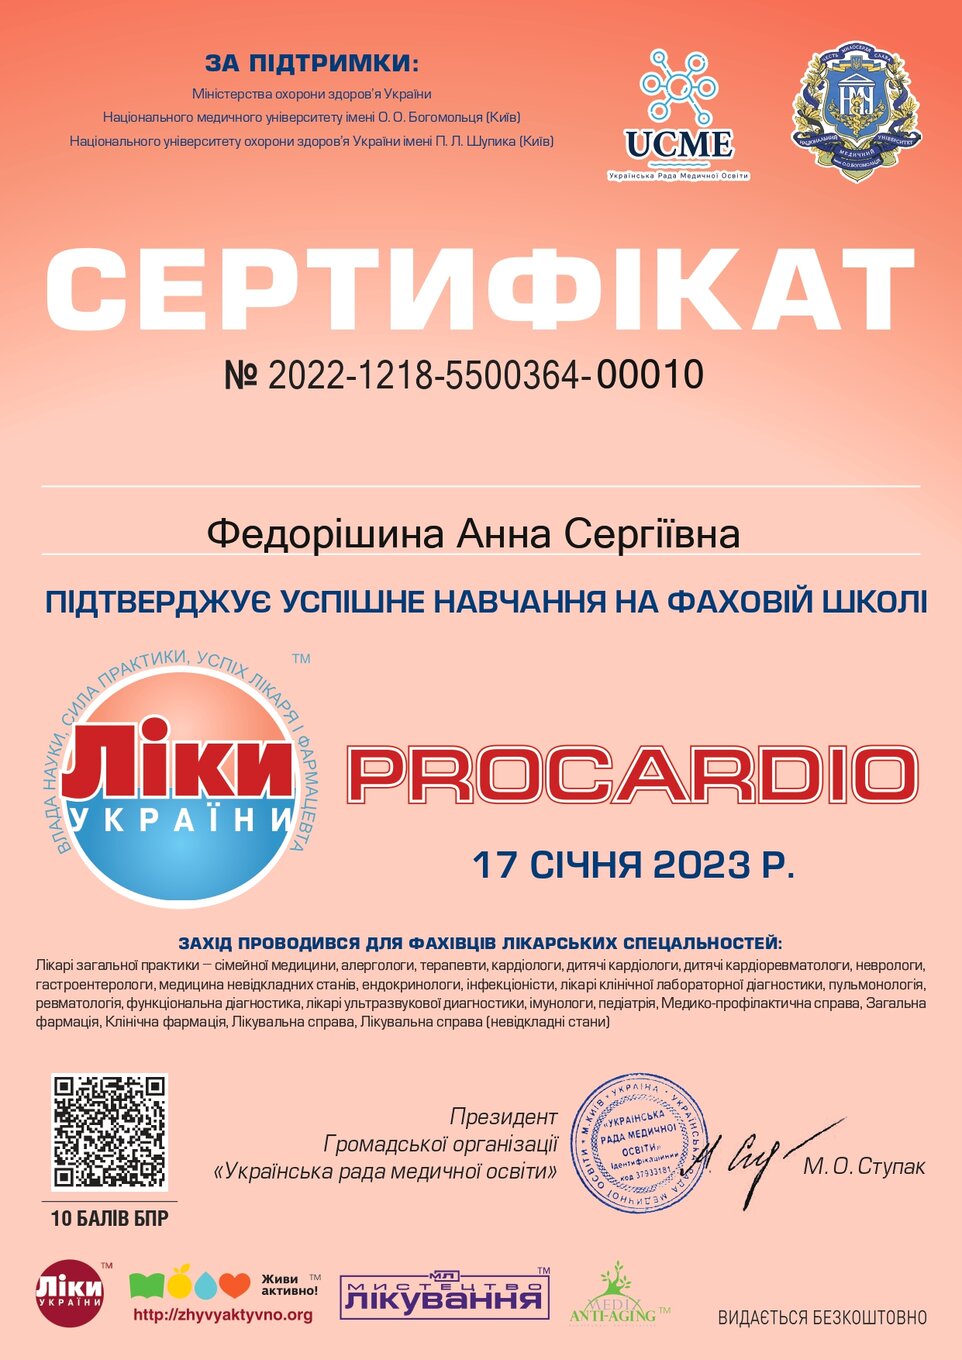 Fedorishina Anna Sergiyivna sertifikat4